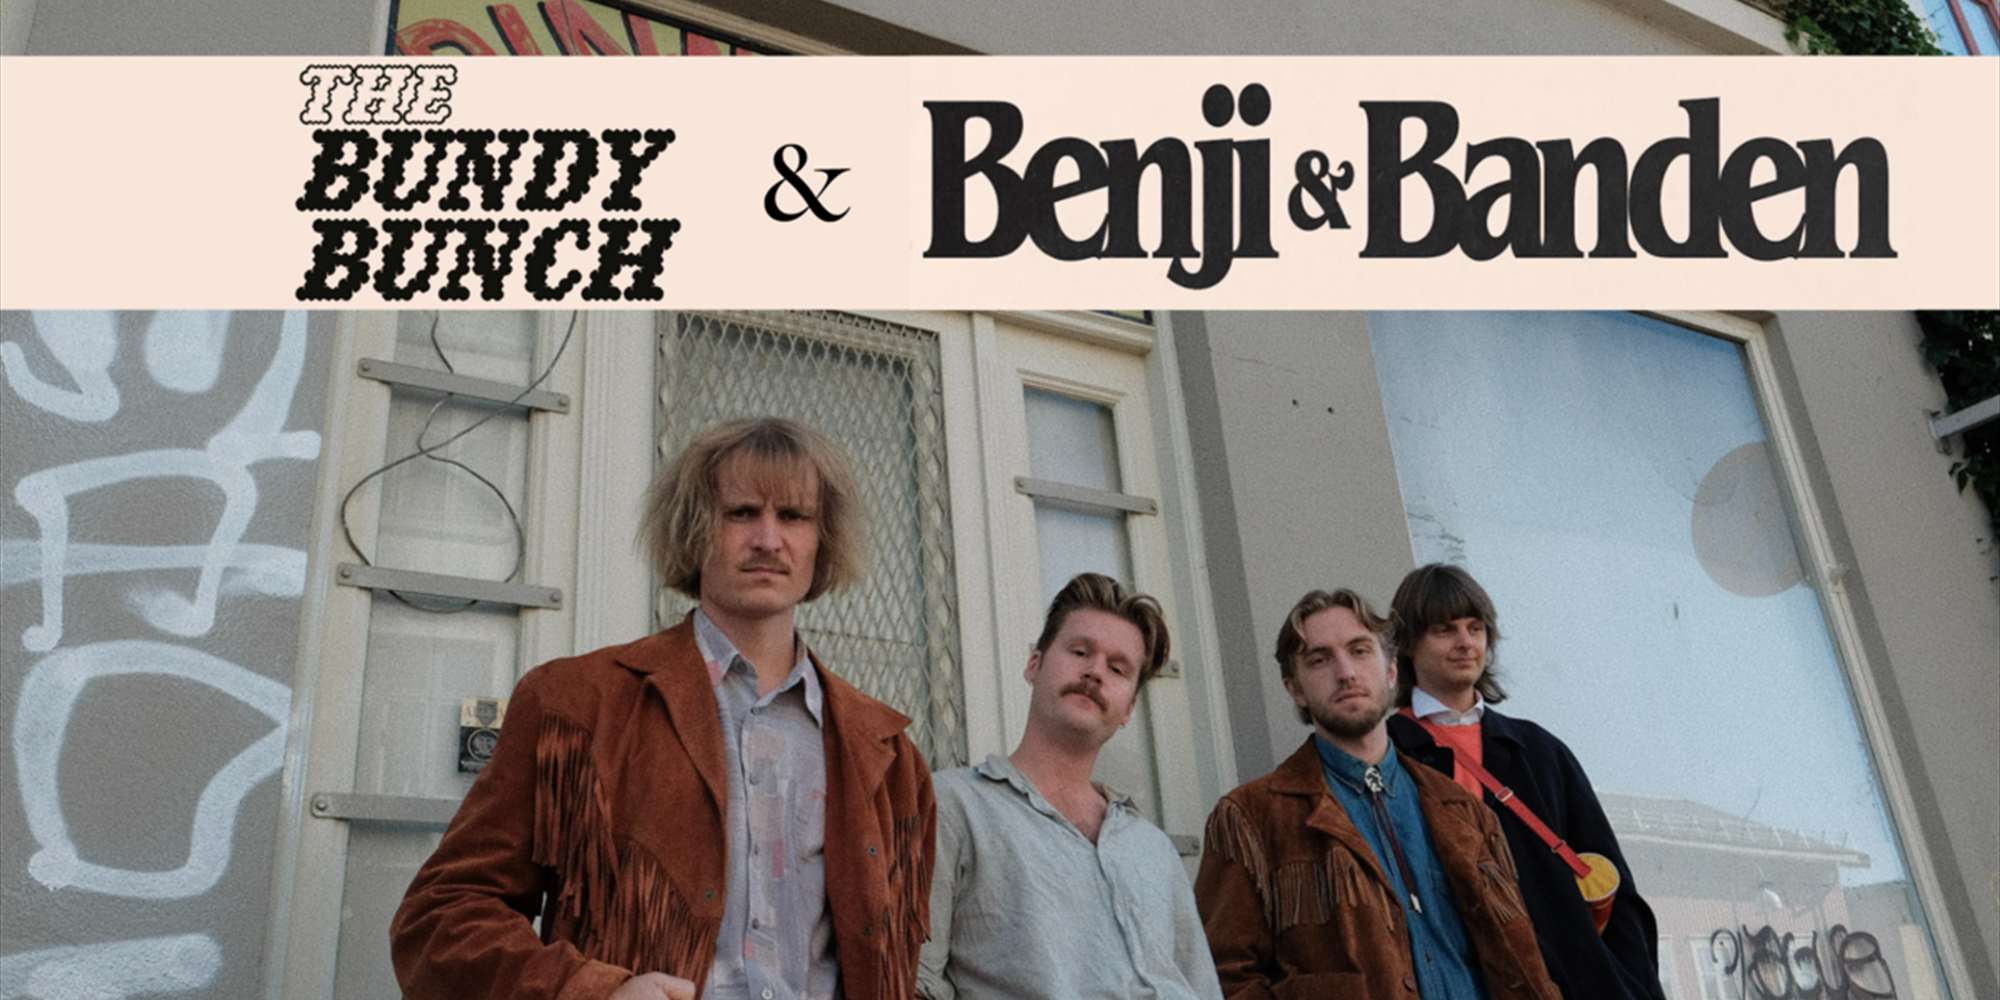 The Bundy Bunch + Benji & Banden